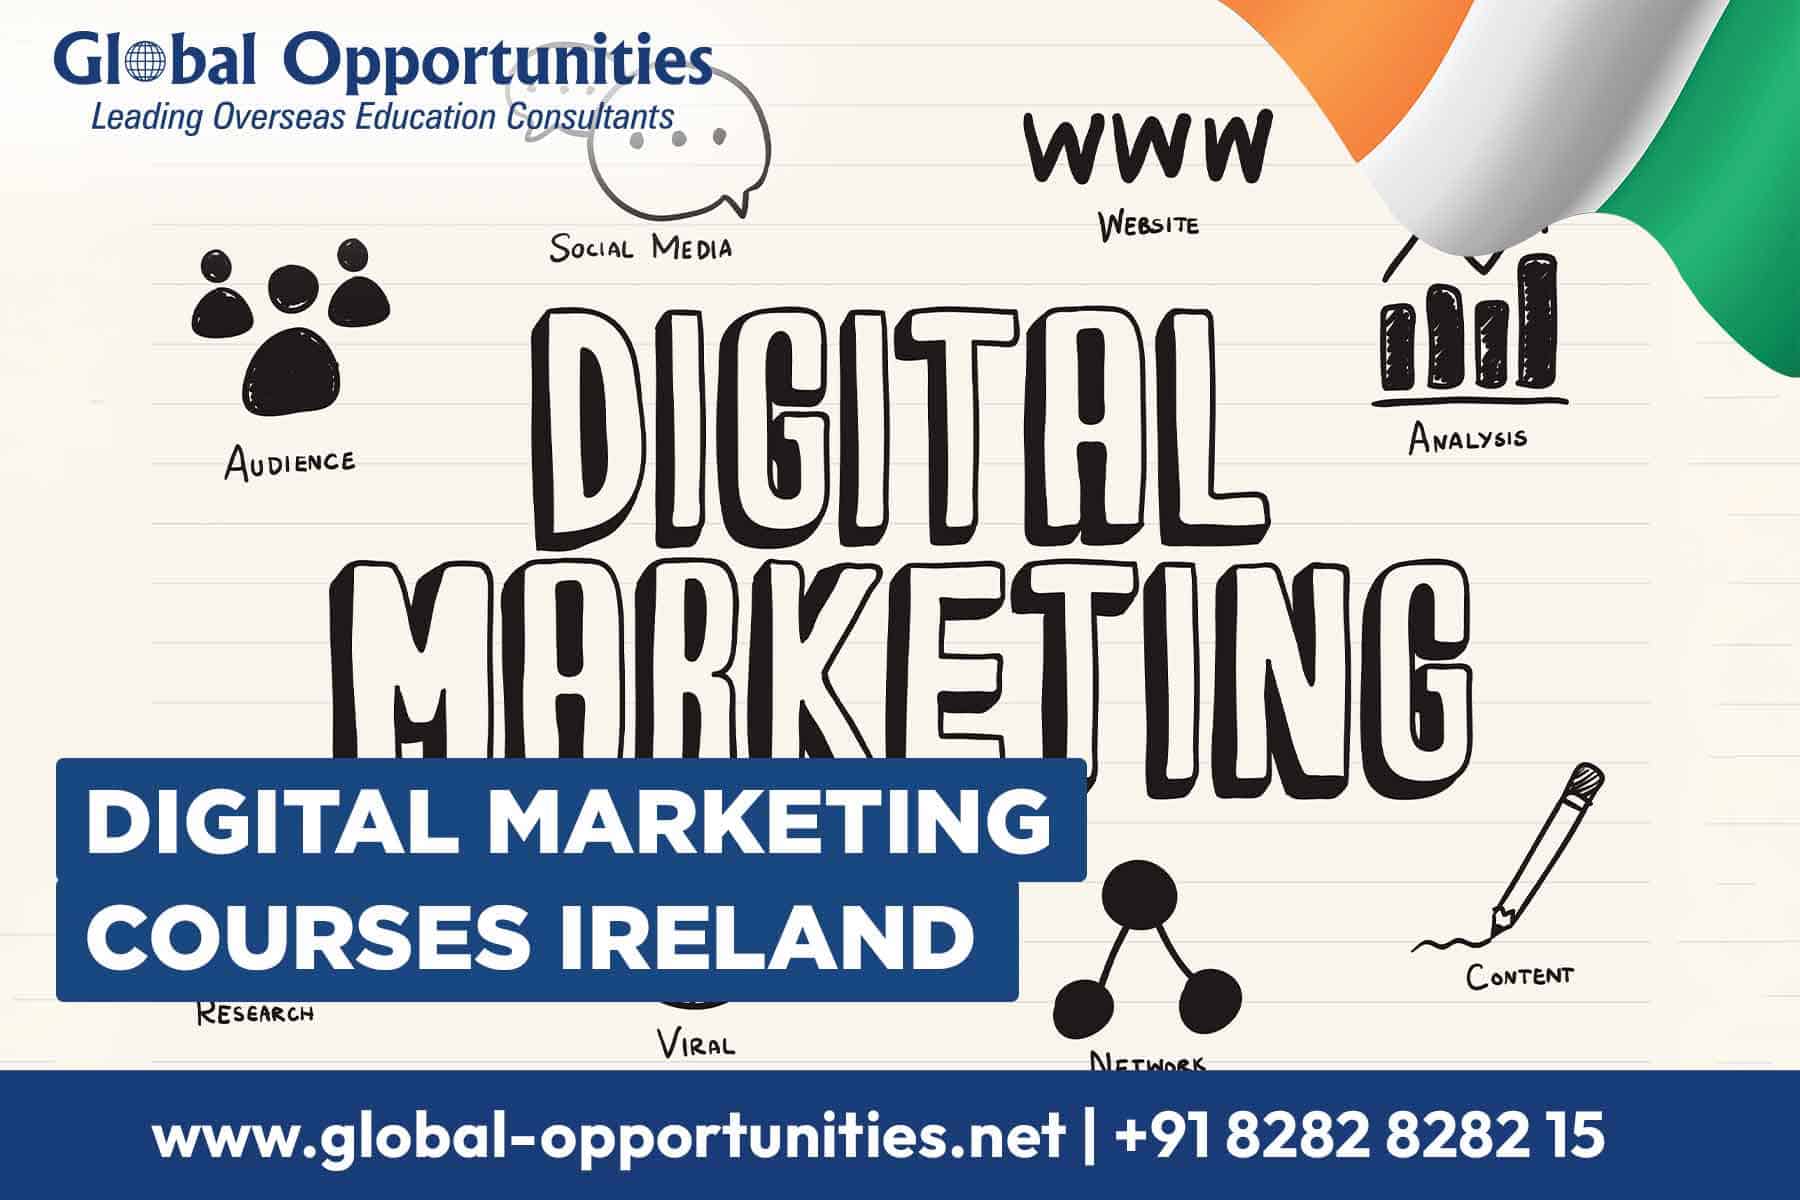 Digital Marketing Courses in Ireland